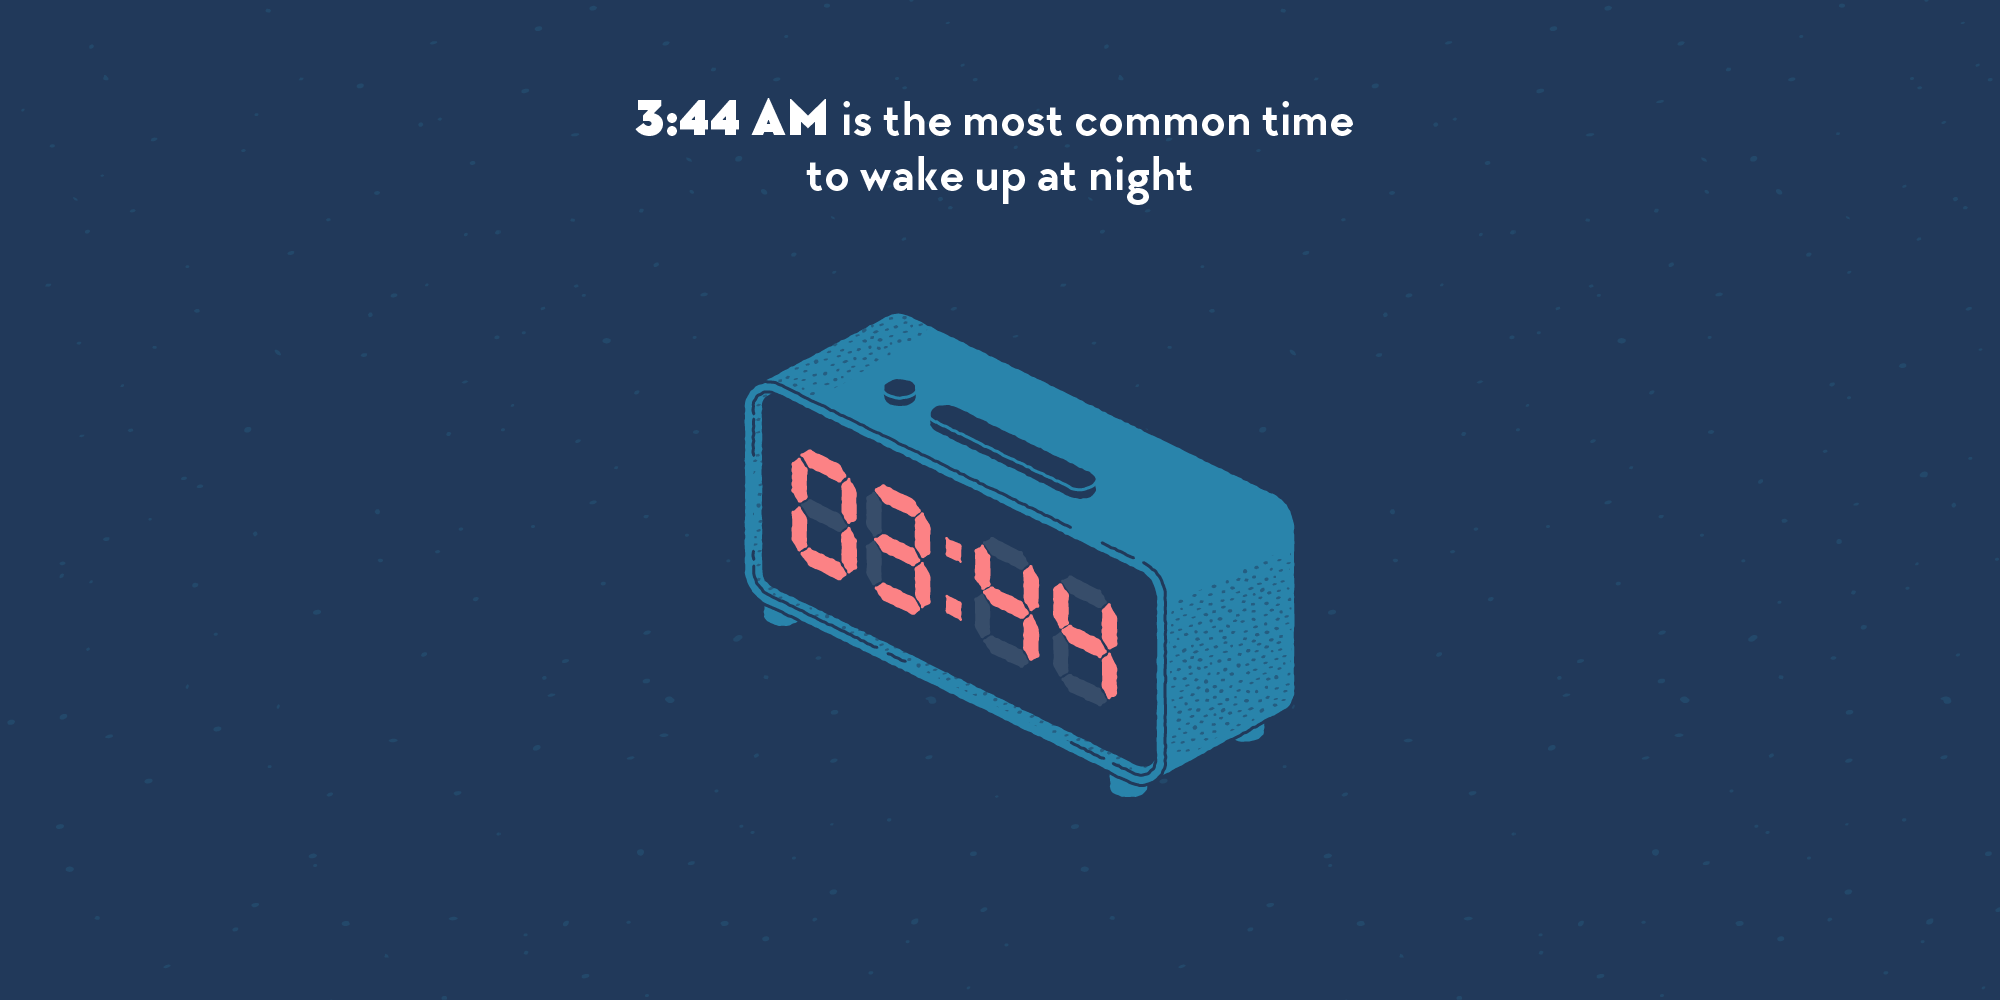 A digital alarm clock in the dark. The displays reads 3:44.